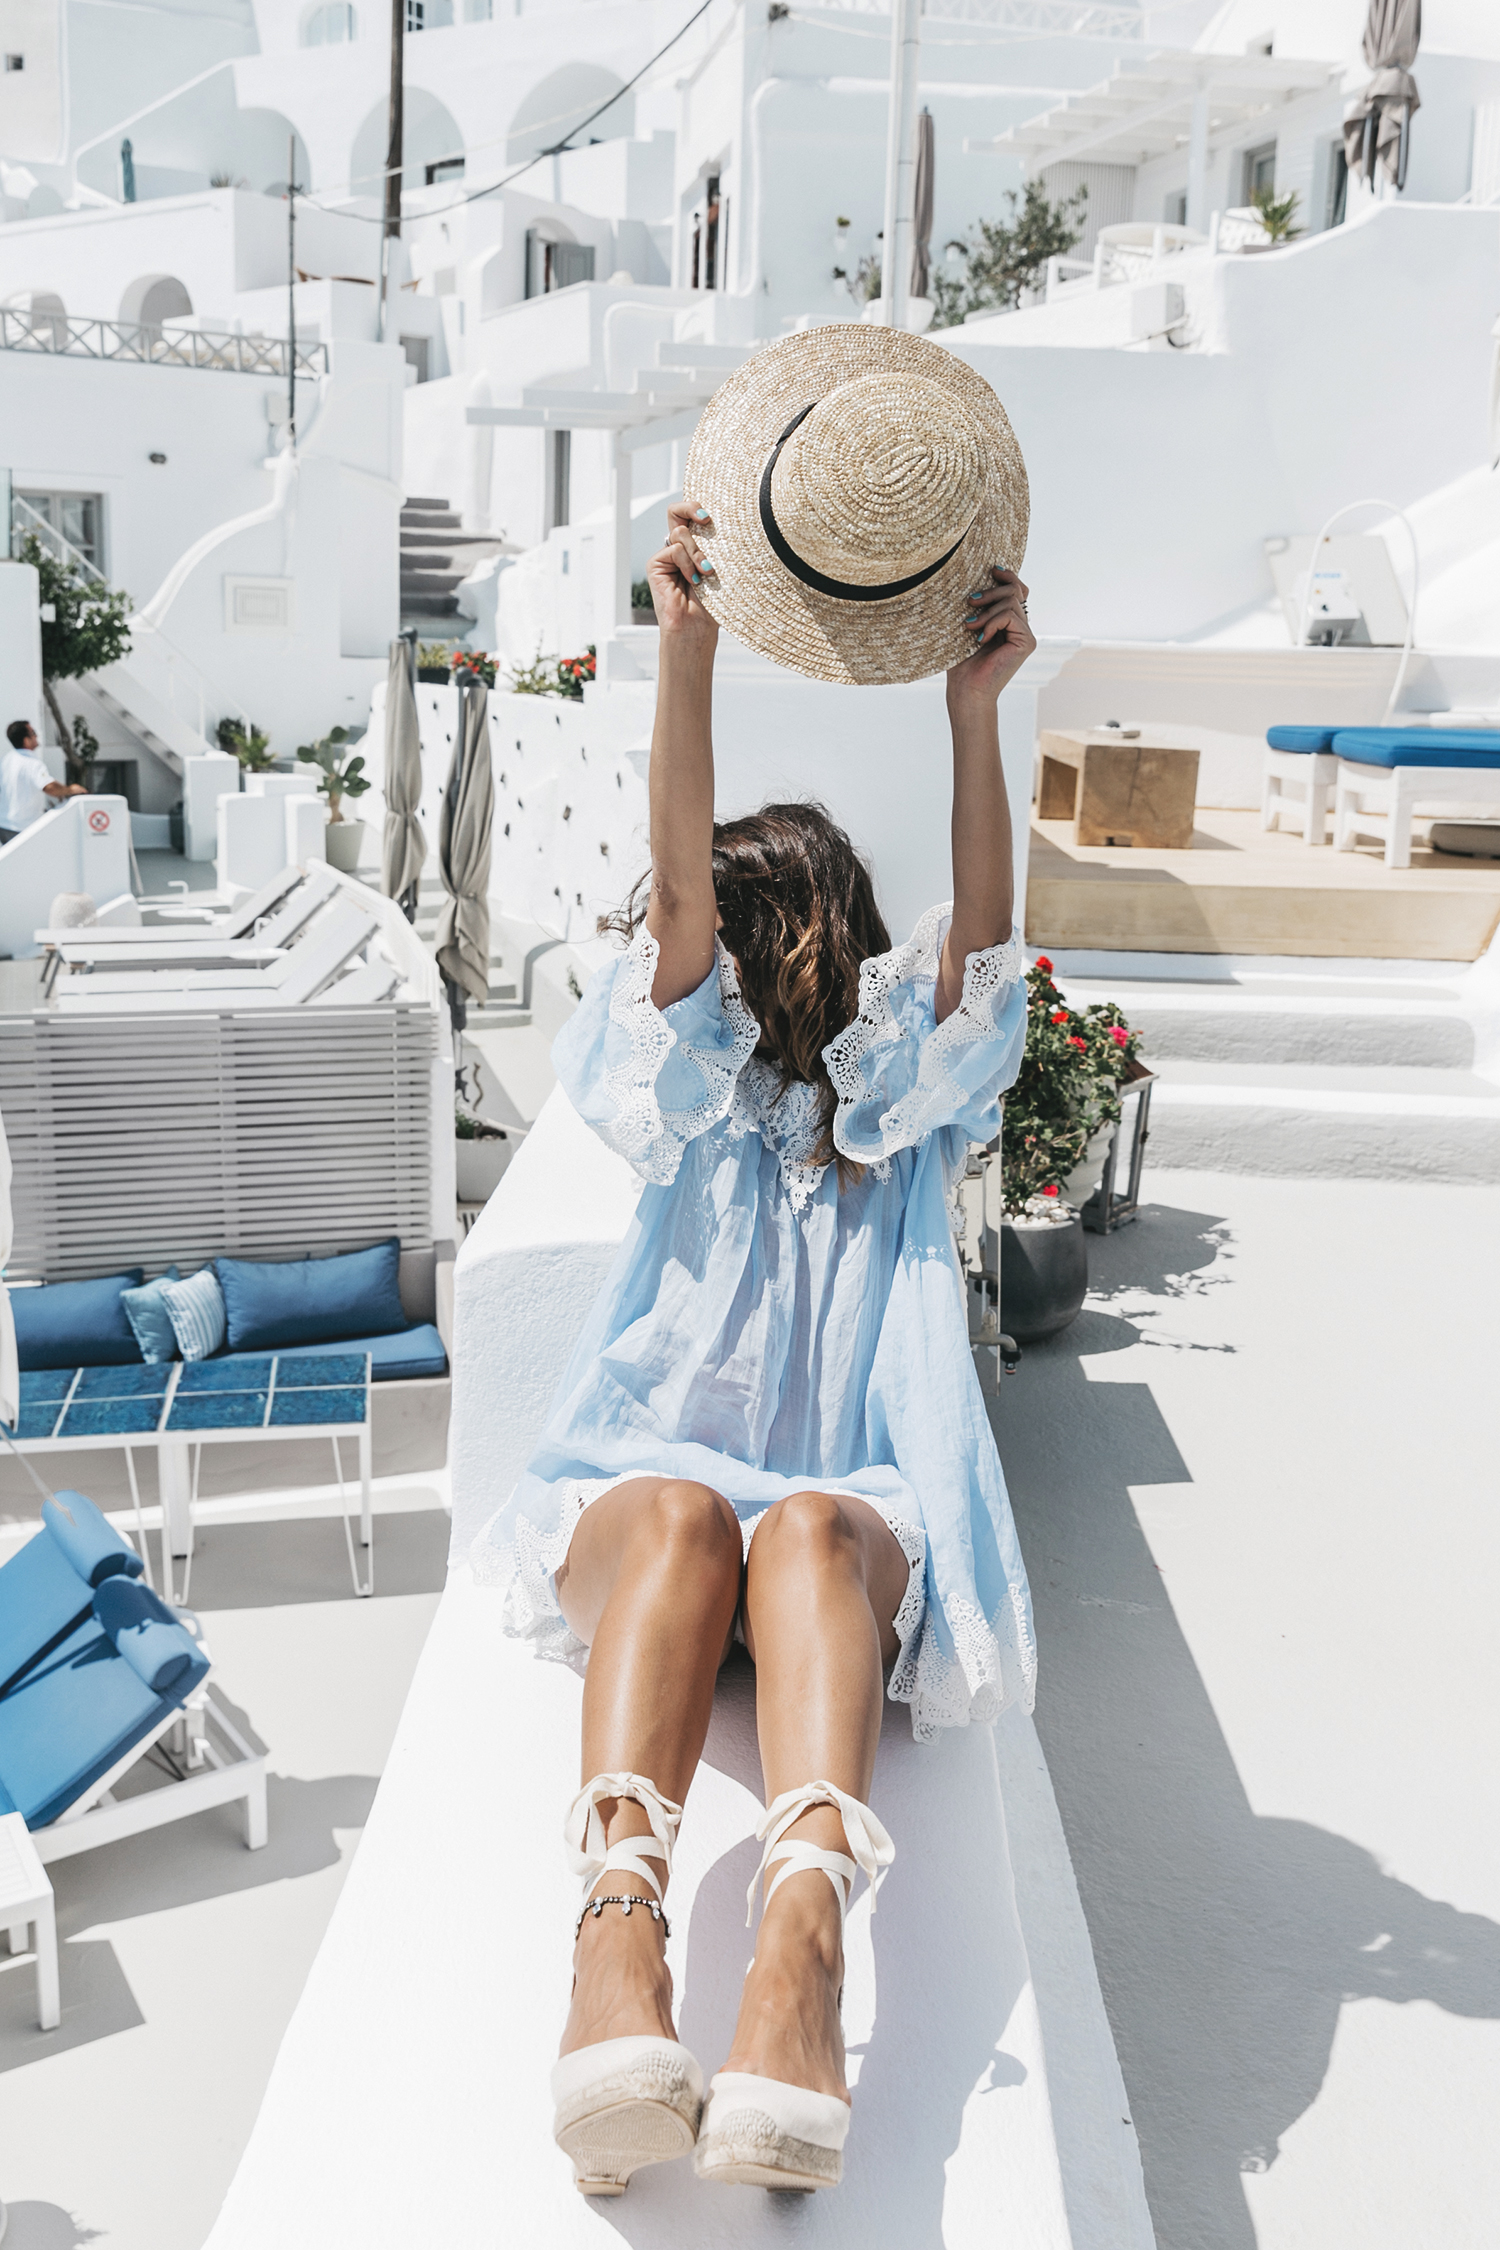 Blue_Dress-Soludos_Escapes-Soludos_Espadrilles-Canotier-Hat-Lack_Of_Color-Summer-Santorini-Collage_Vintage-61